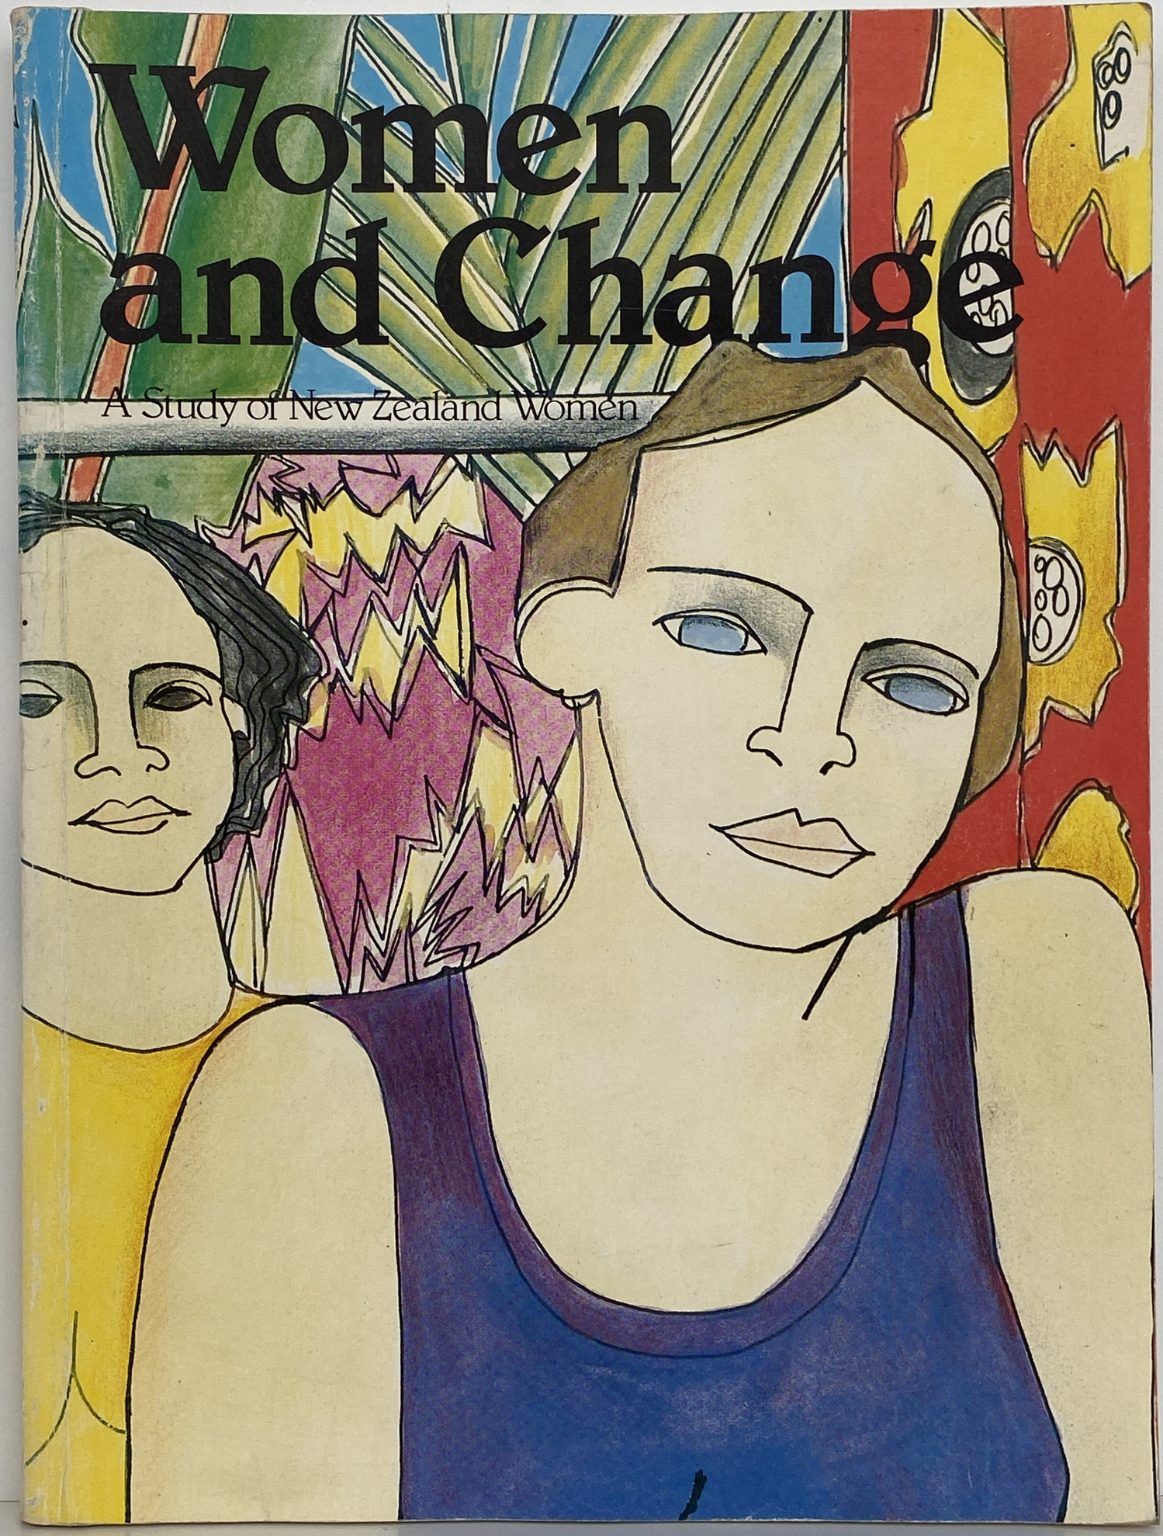 WOMEN and CHANGE: A Study of New Zealand Women